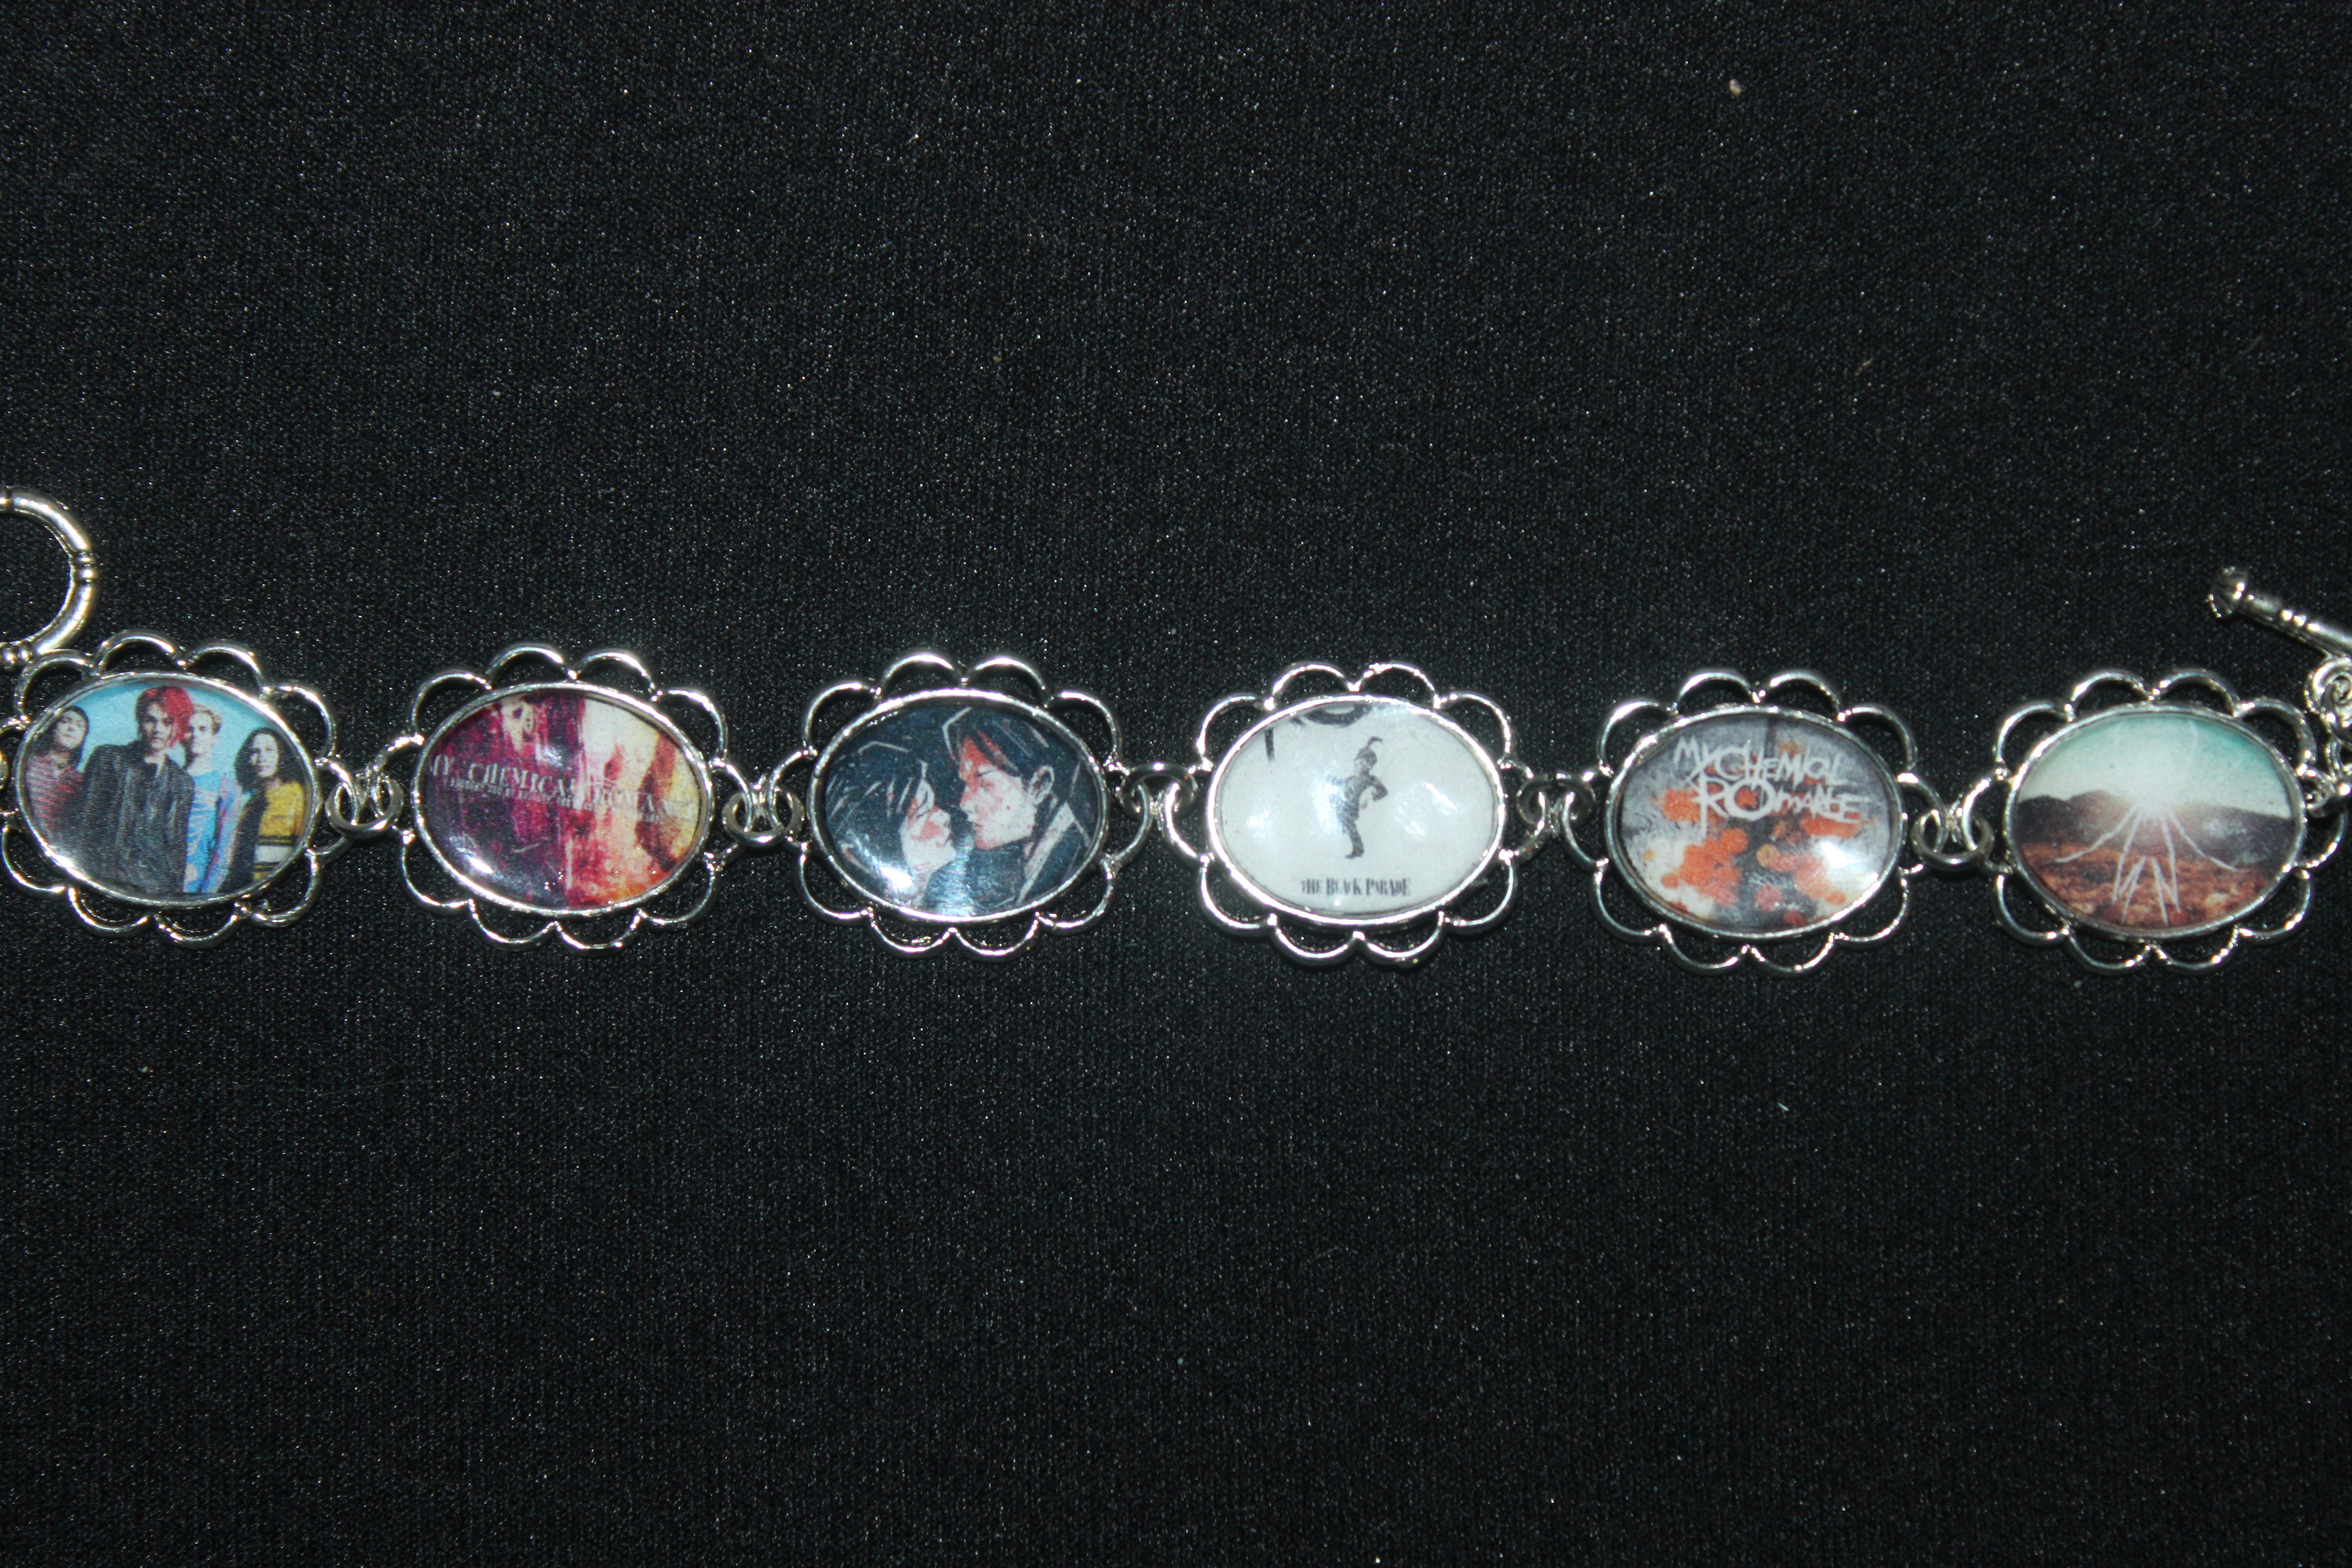 My Chemical Romance (MCR) album covers bracelet - My Chemical Romance Fan Art ...4752 x 3168